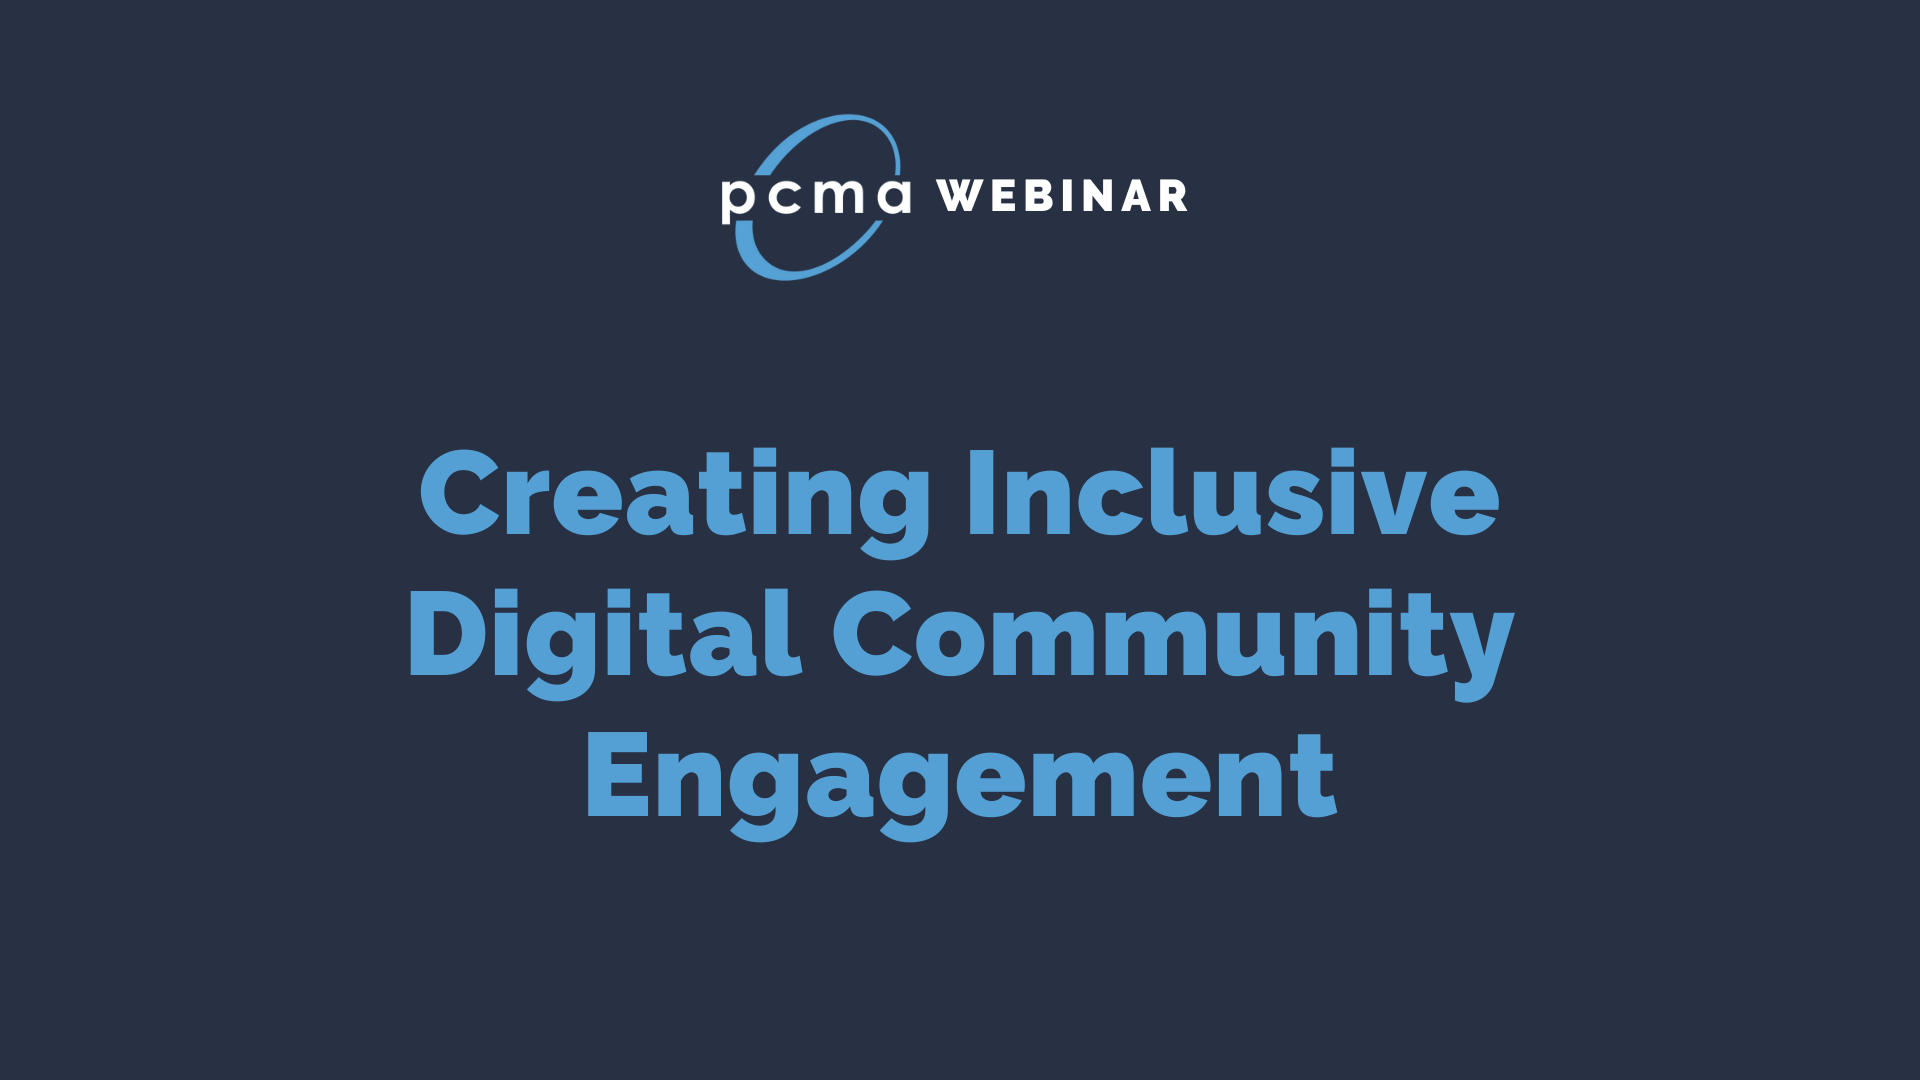 PCMA Webinar Creating Inclusive Digital Community Engagement